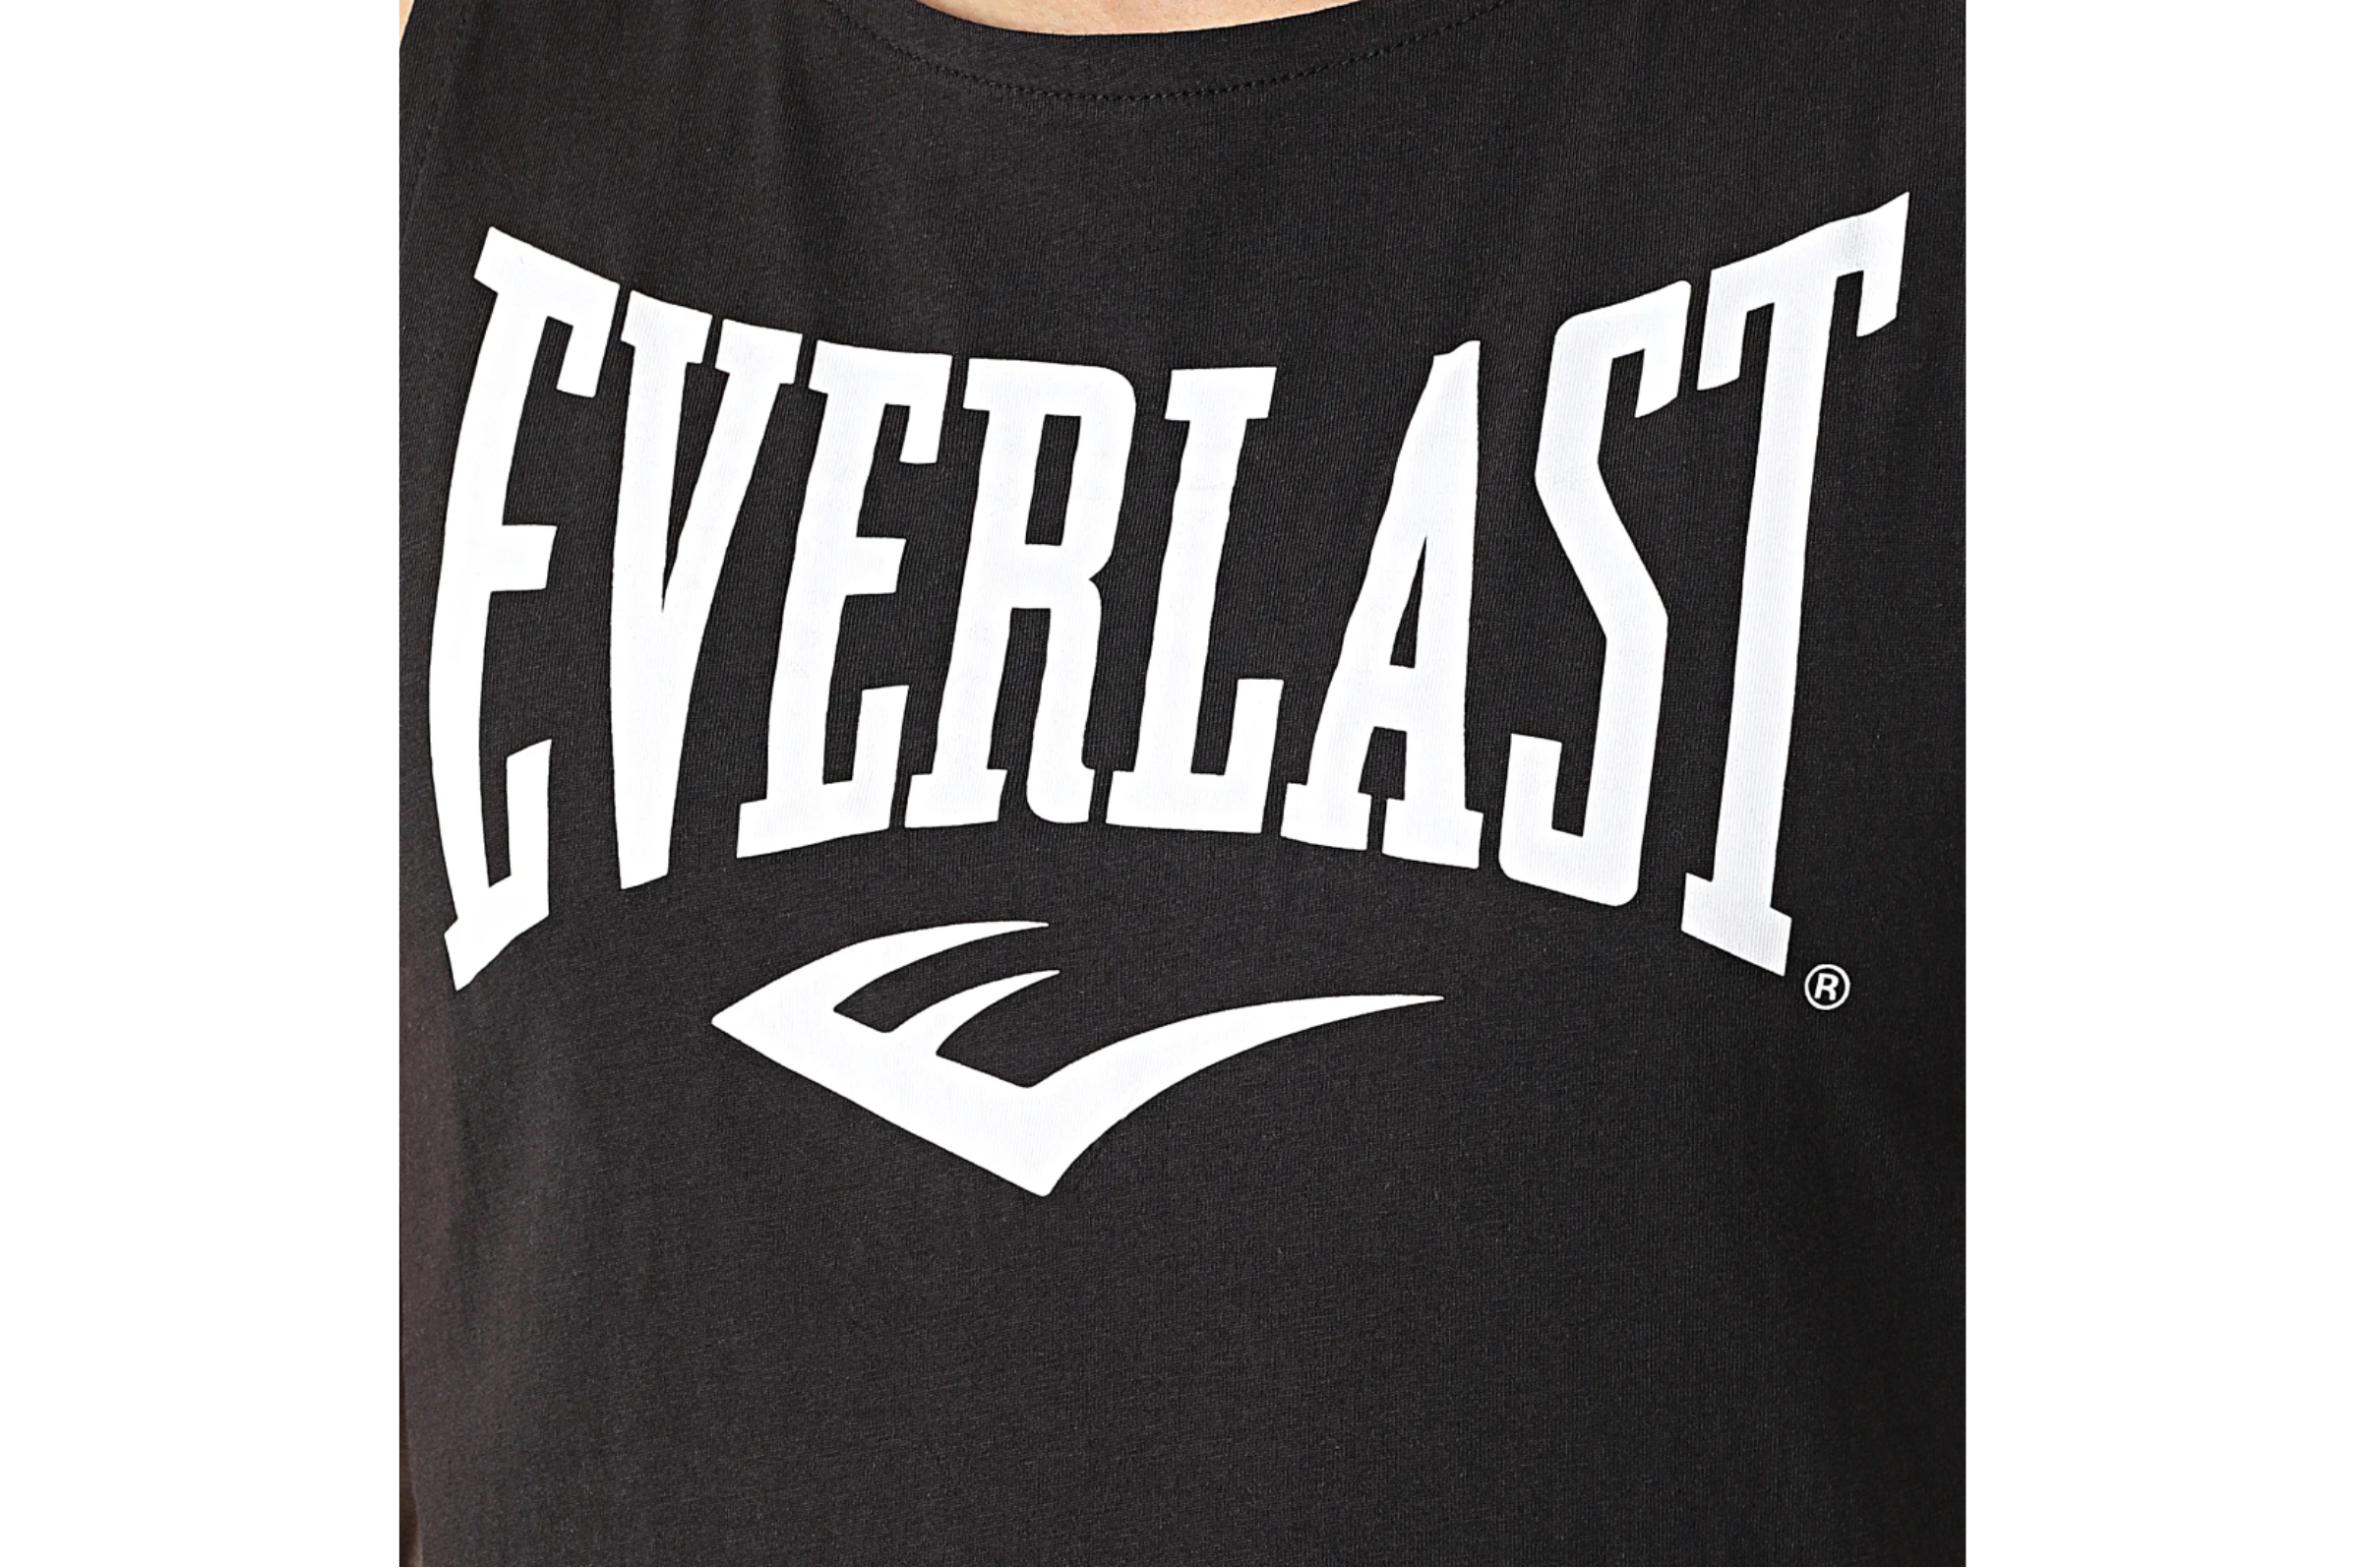 Camiseta deportiva con mangas cortas - Everlast 2020, Everlast 